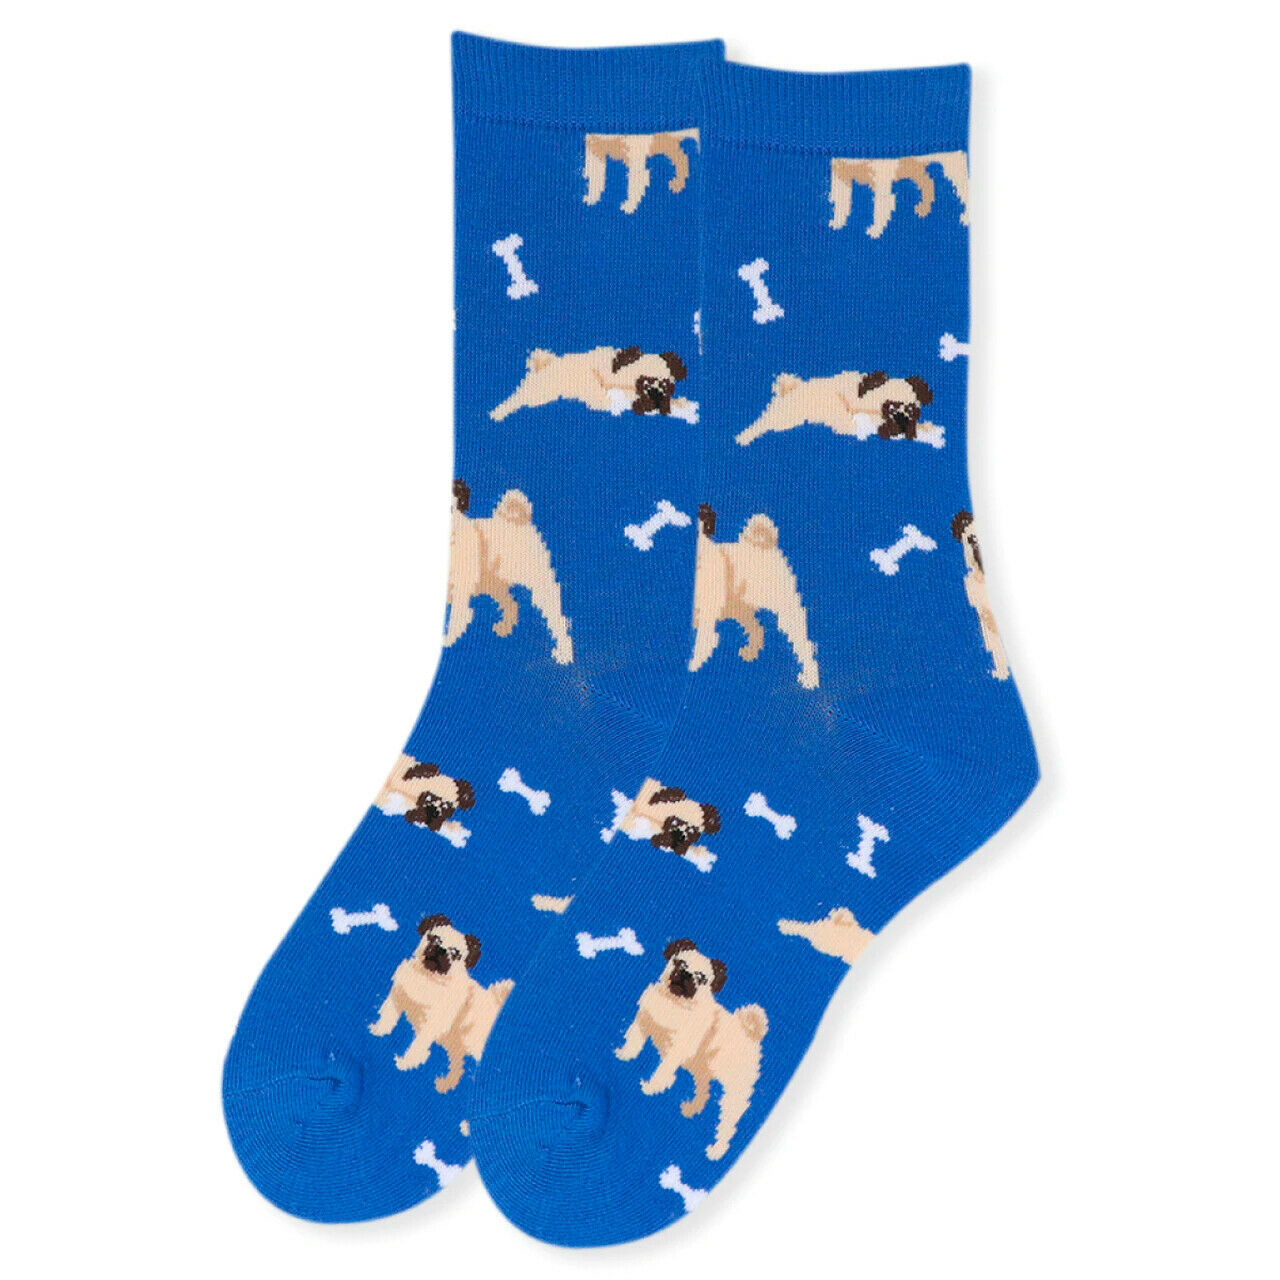 Women's Pug Dog Novelty Dress Socks Size 9-11 Shoe Size 4-10 Blue